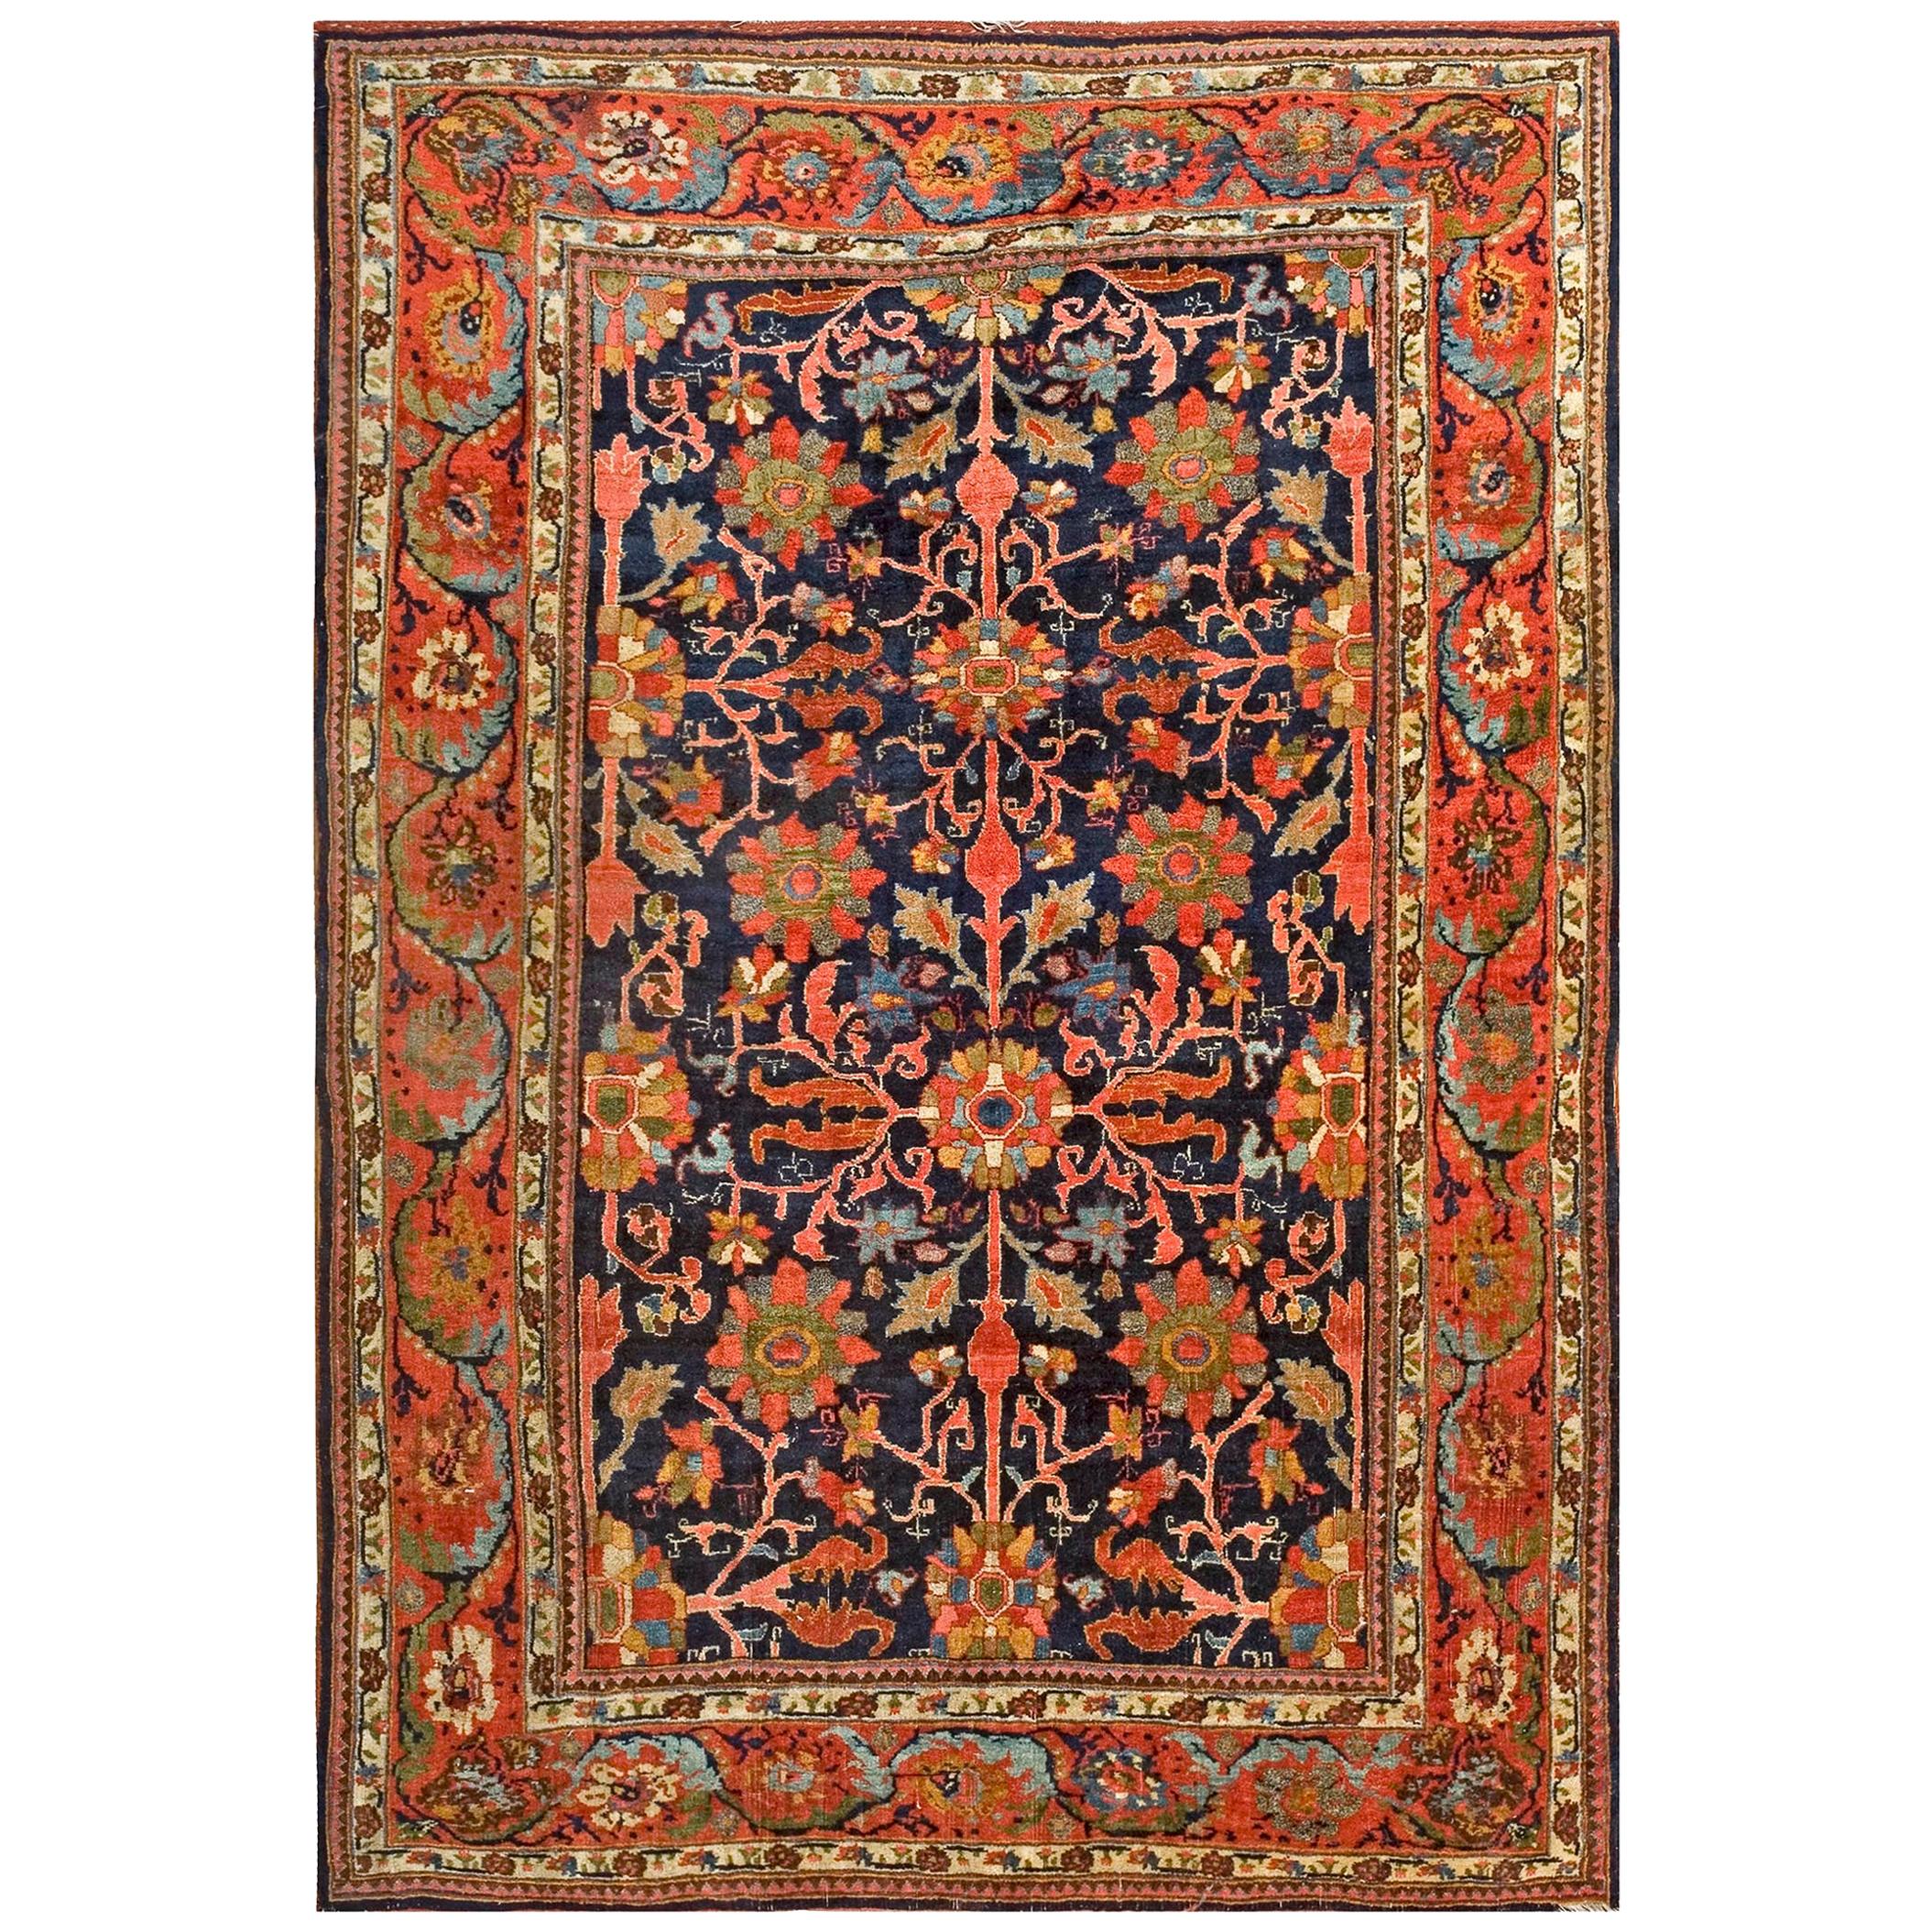 Early 20th Century W. Persian Bijar Carpet ( 4'6" x 6'6" - 137 x 198 )